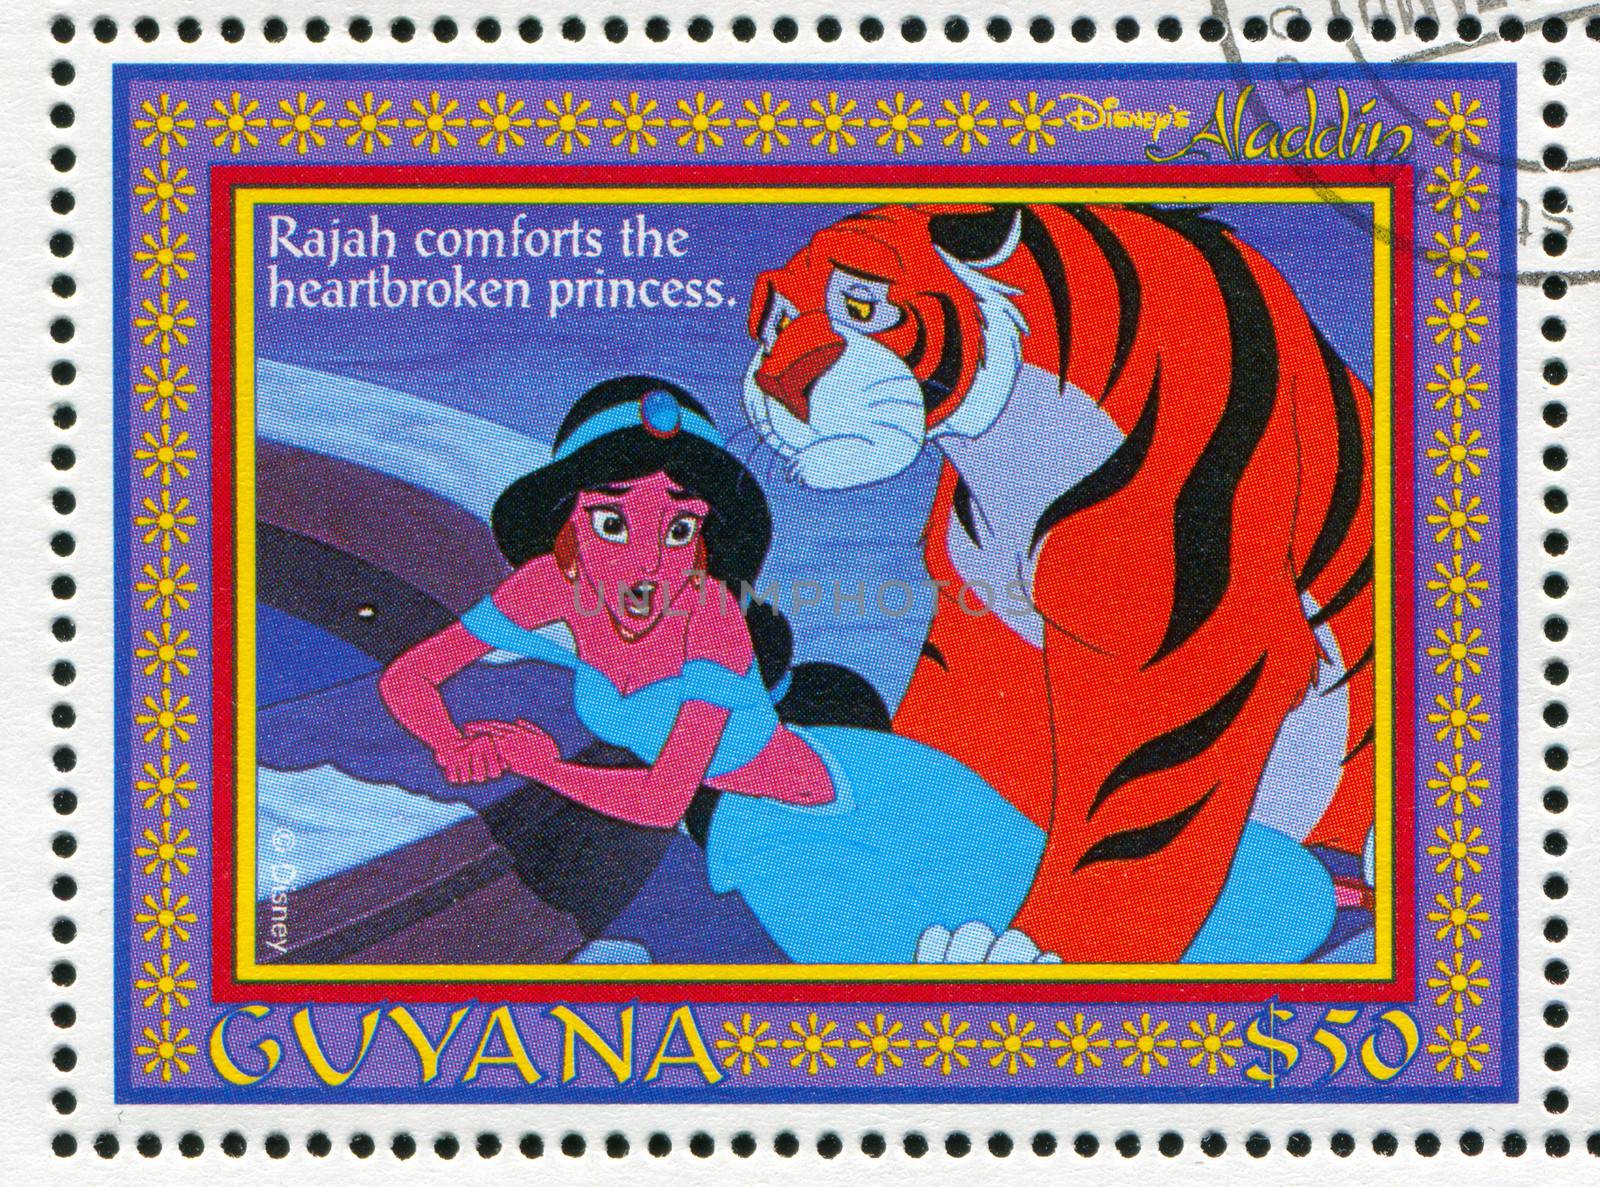 GUYANA - CIRCA 1993: stamp printed by Guyana, shows Aladdin, Disney animated film, Rajah and Jasmine, circa 1993